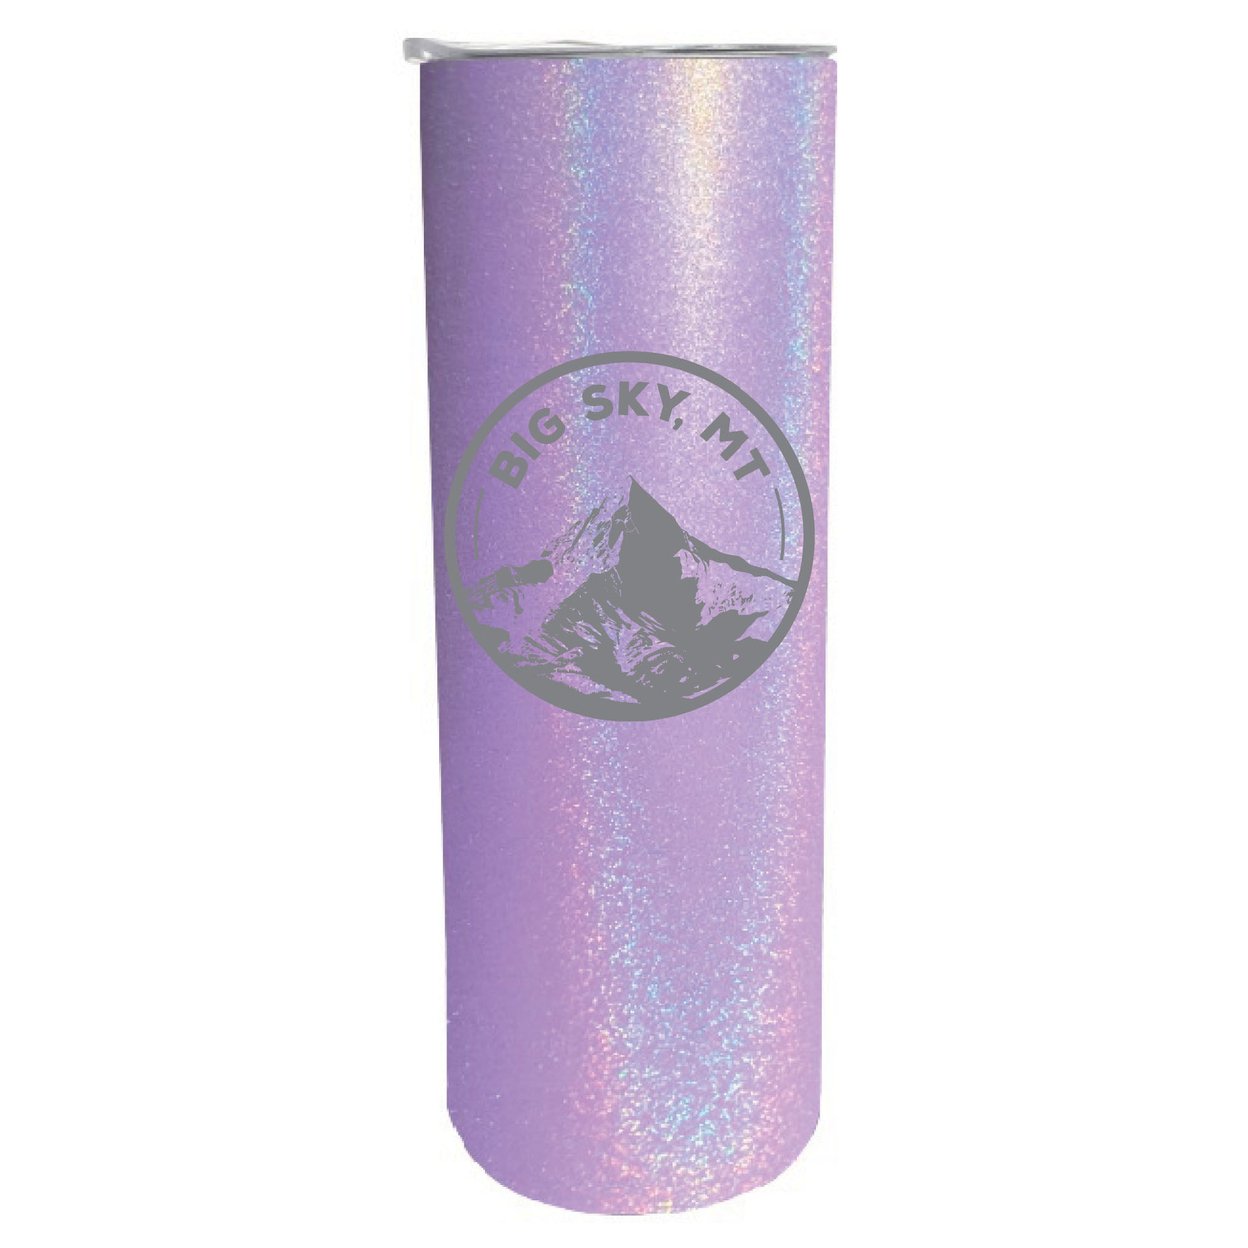 Big Sky Montana Souvenir 20 Oz Engraved Insulated Stainless Steel Skinny Tumbler - Purple Glitter,,2-Pack